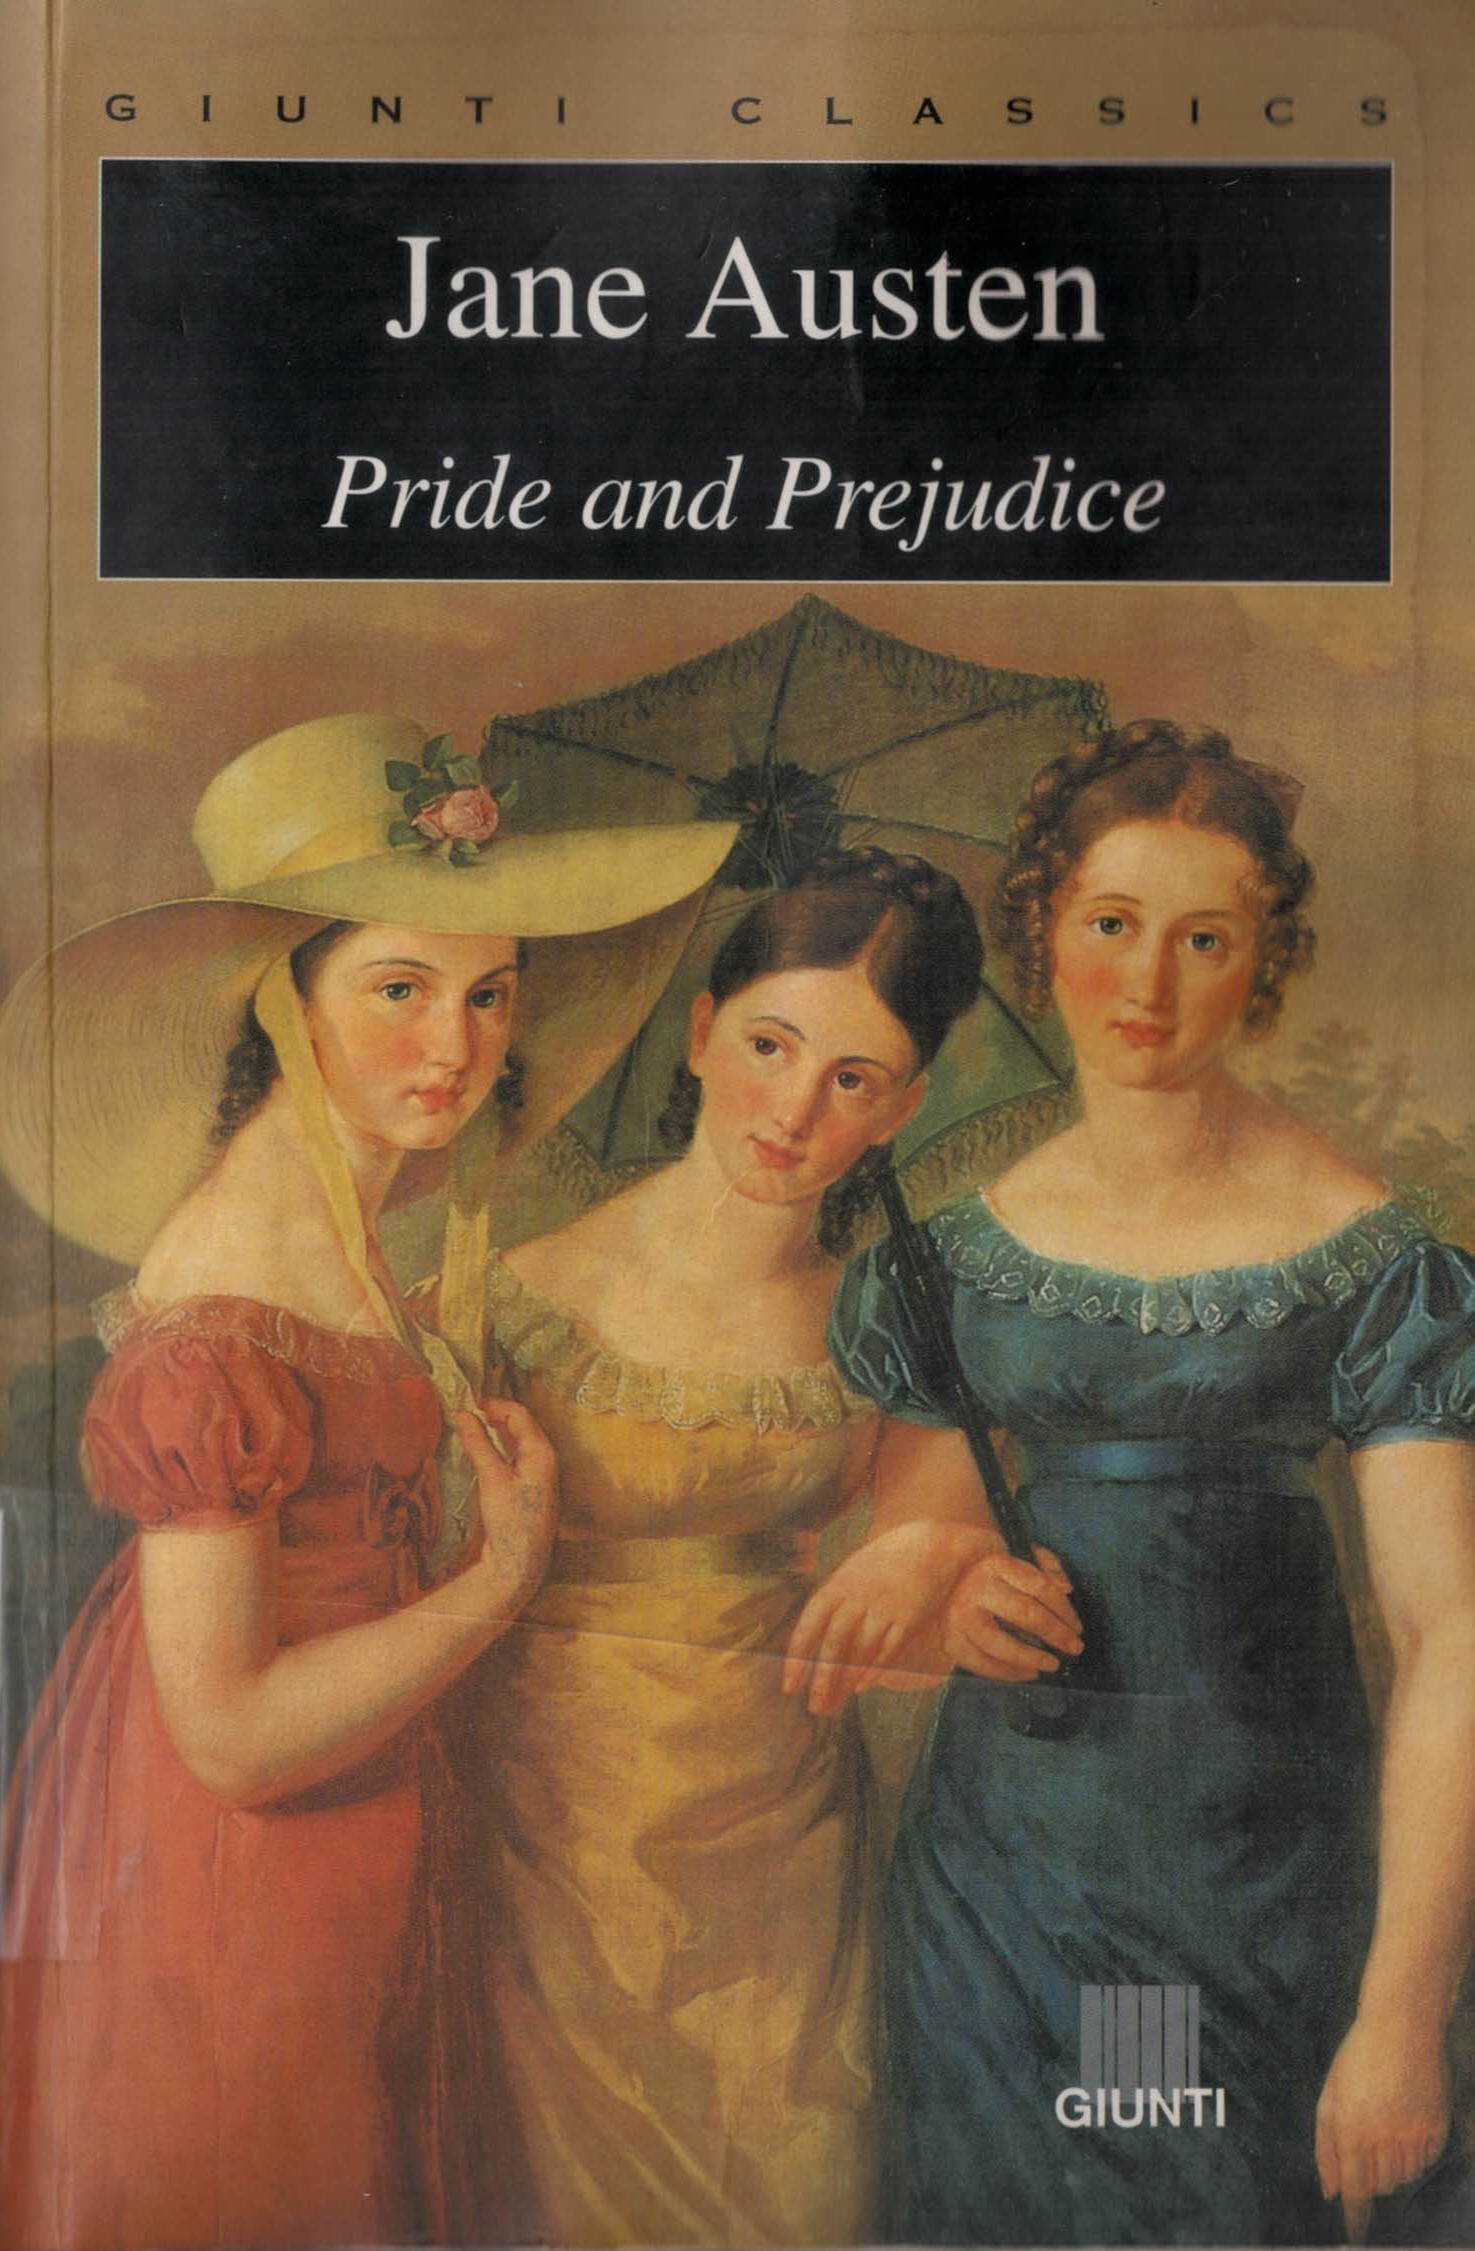 Copertina di Pride and prejudice-ing